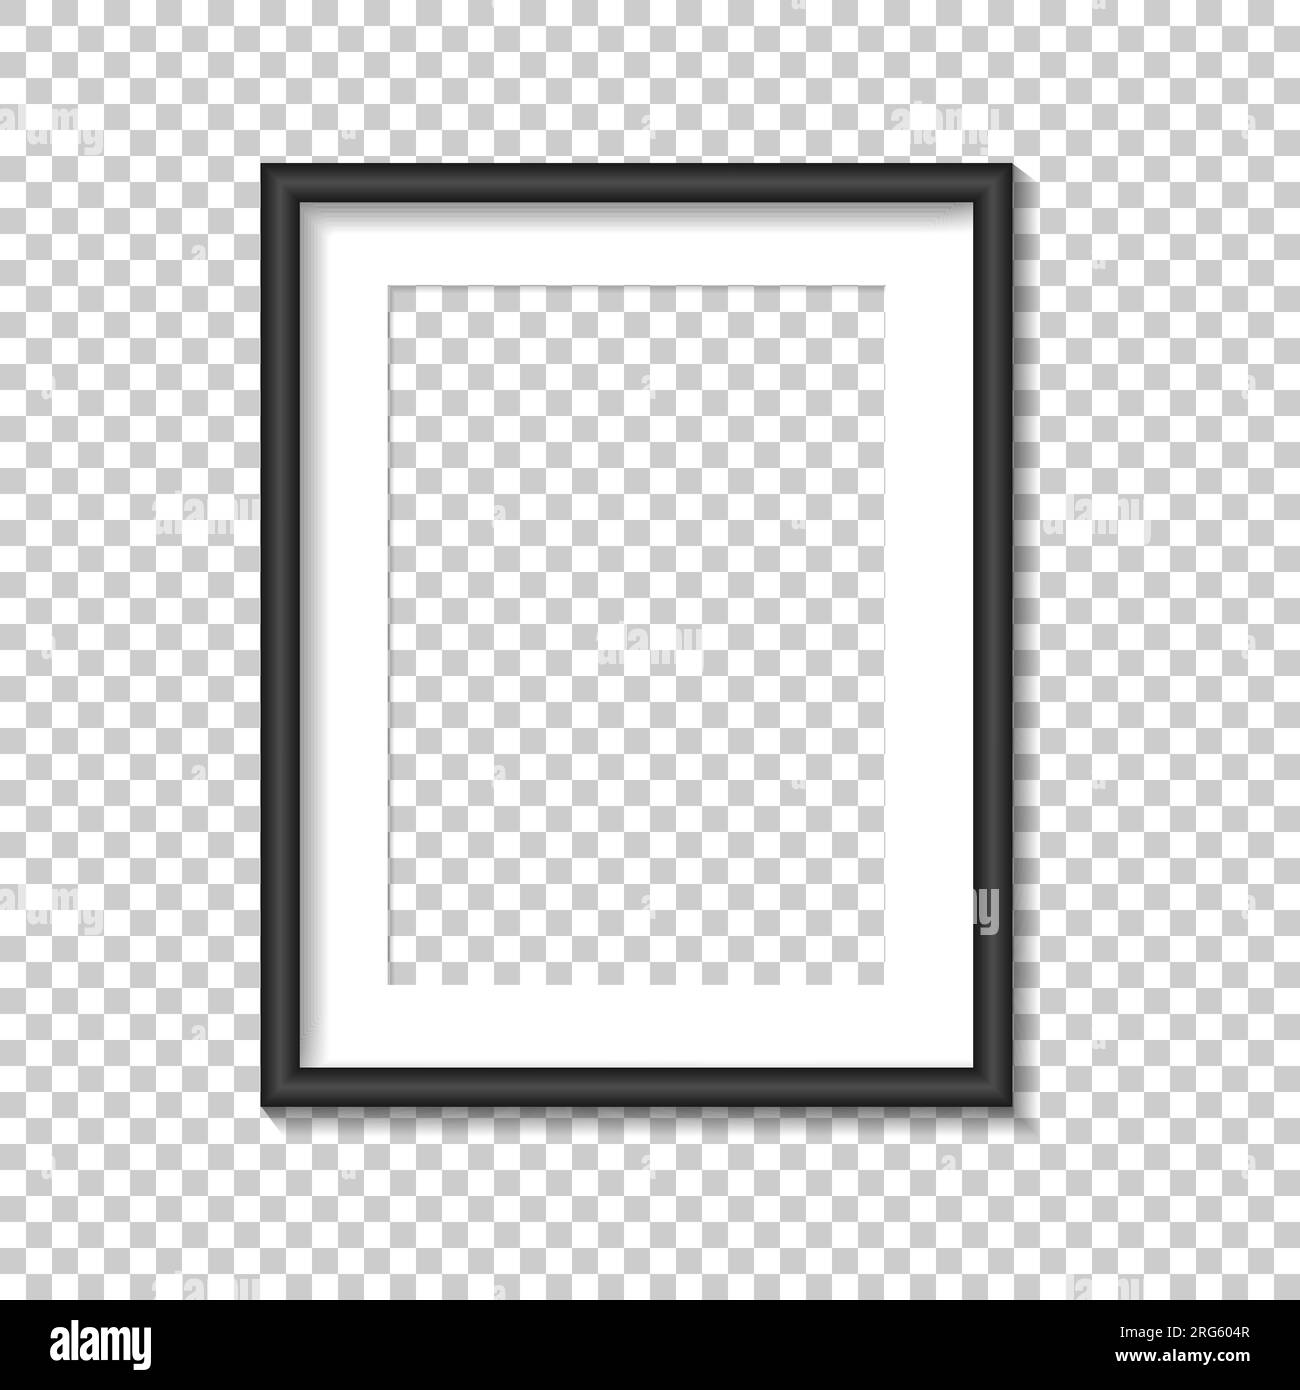 Black photo frame template. Vector illustration Stock Vector Image ...